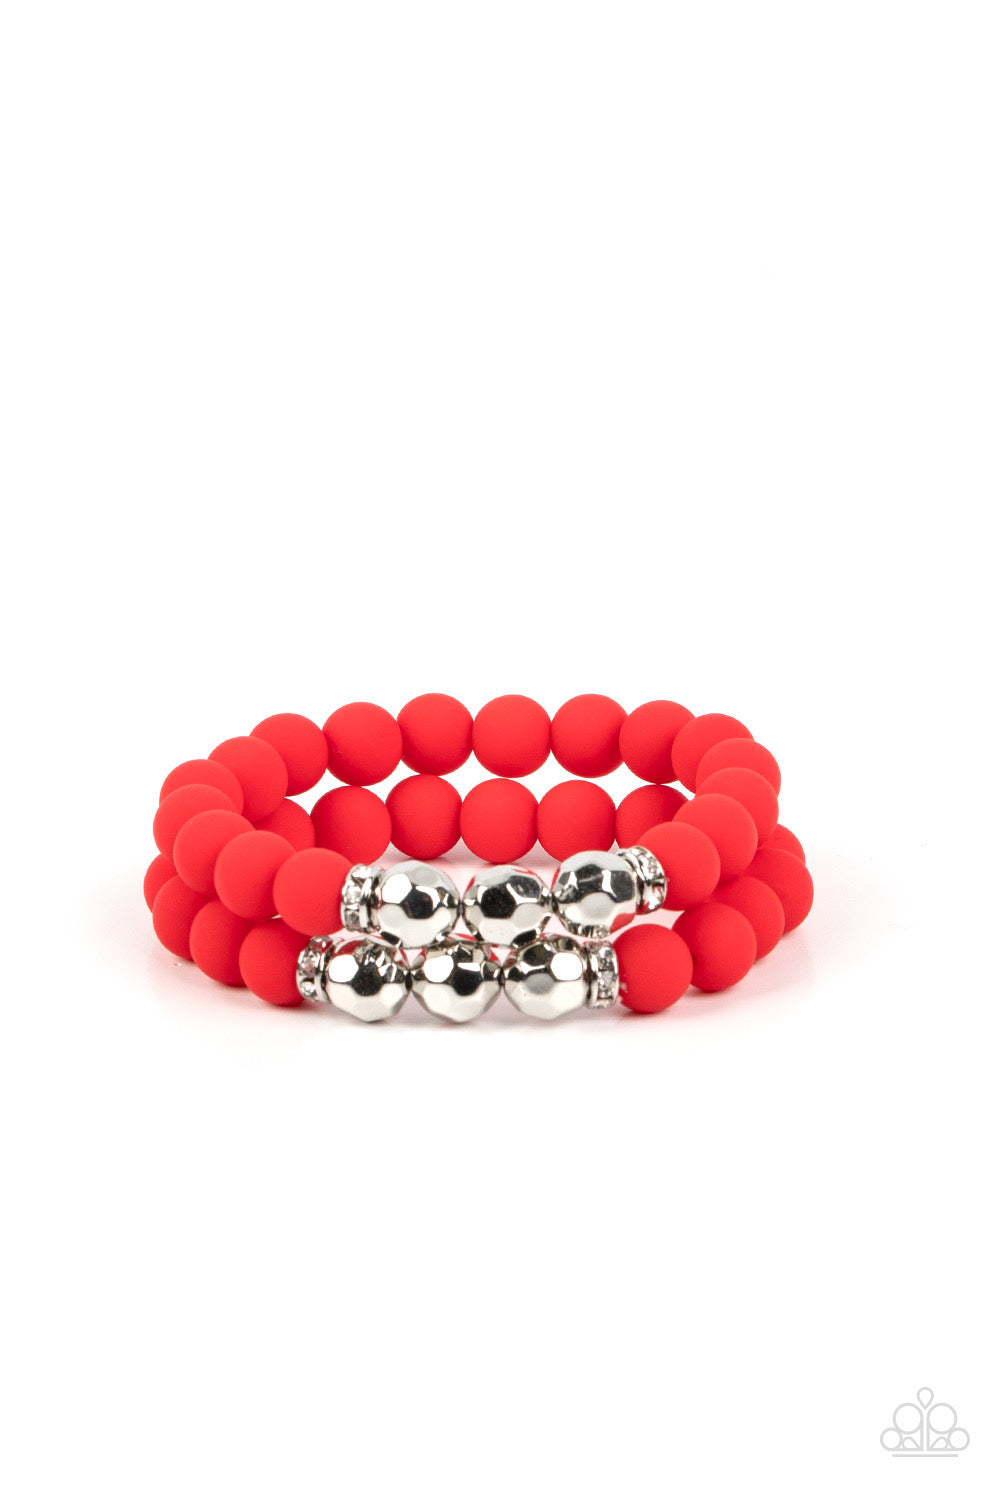 Brighton, Jewelry, Brighton 2 Red White Beads For Bracelets Necklaces  Holiday Hohoho Like New